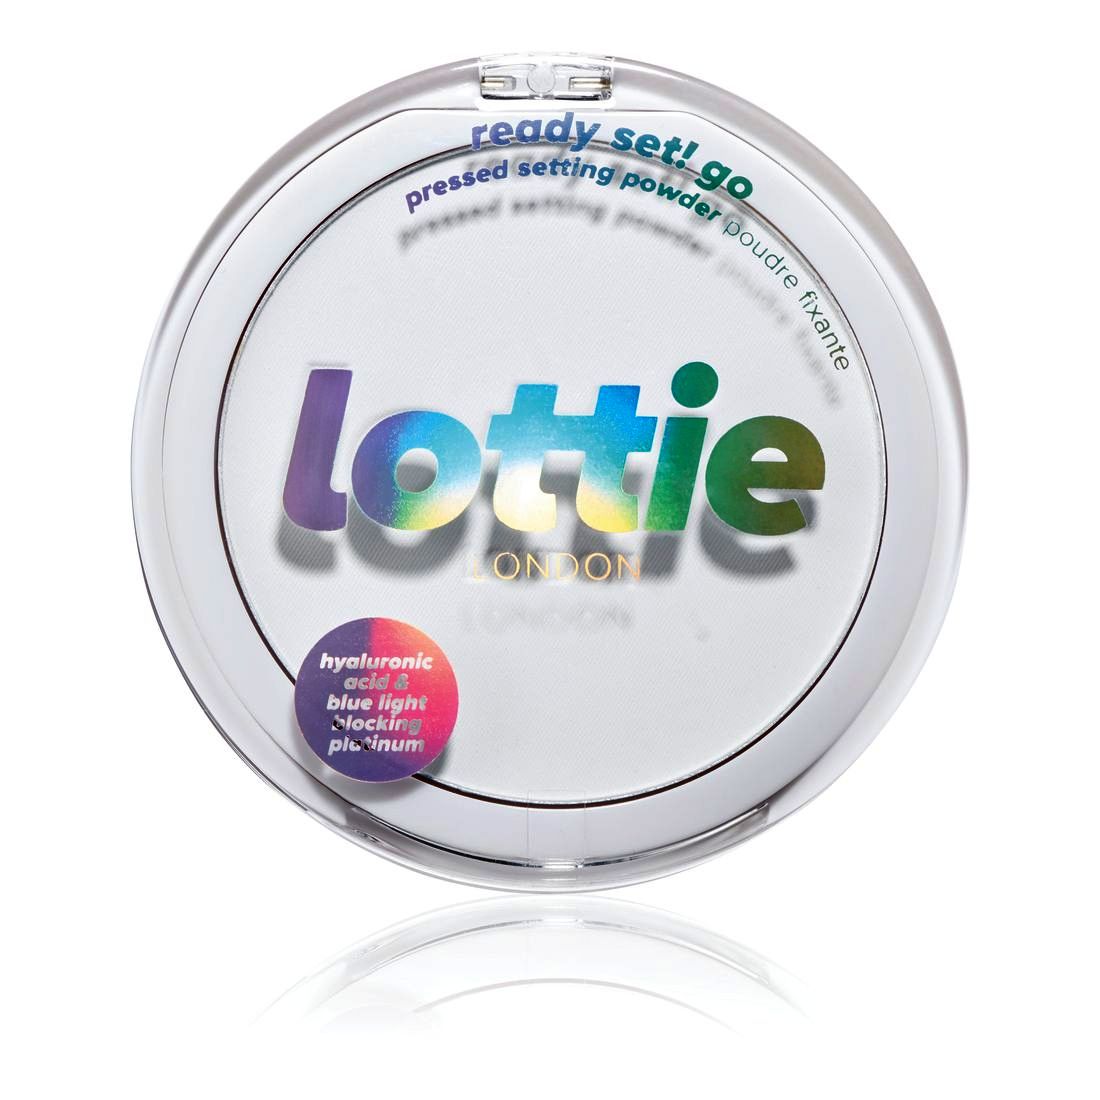 Lottie London Ready Set! Go Pressed powder Translucent